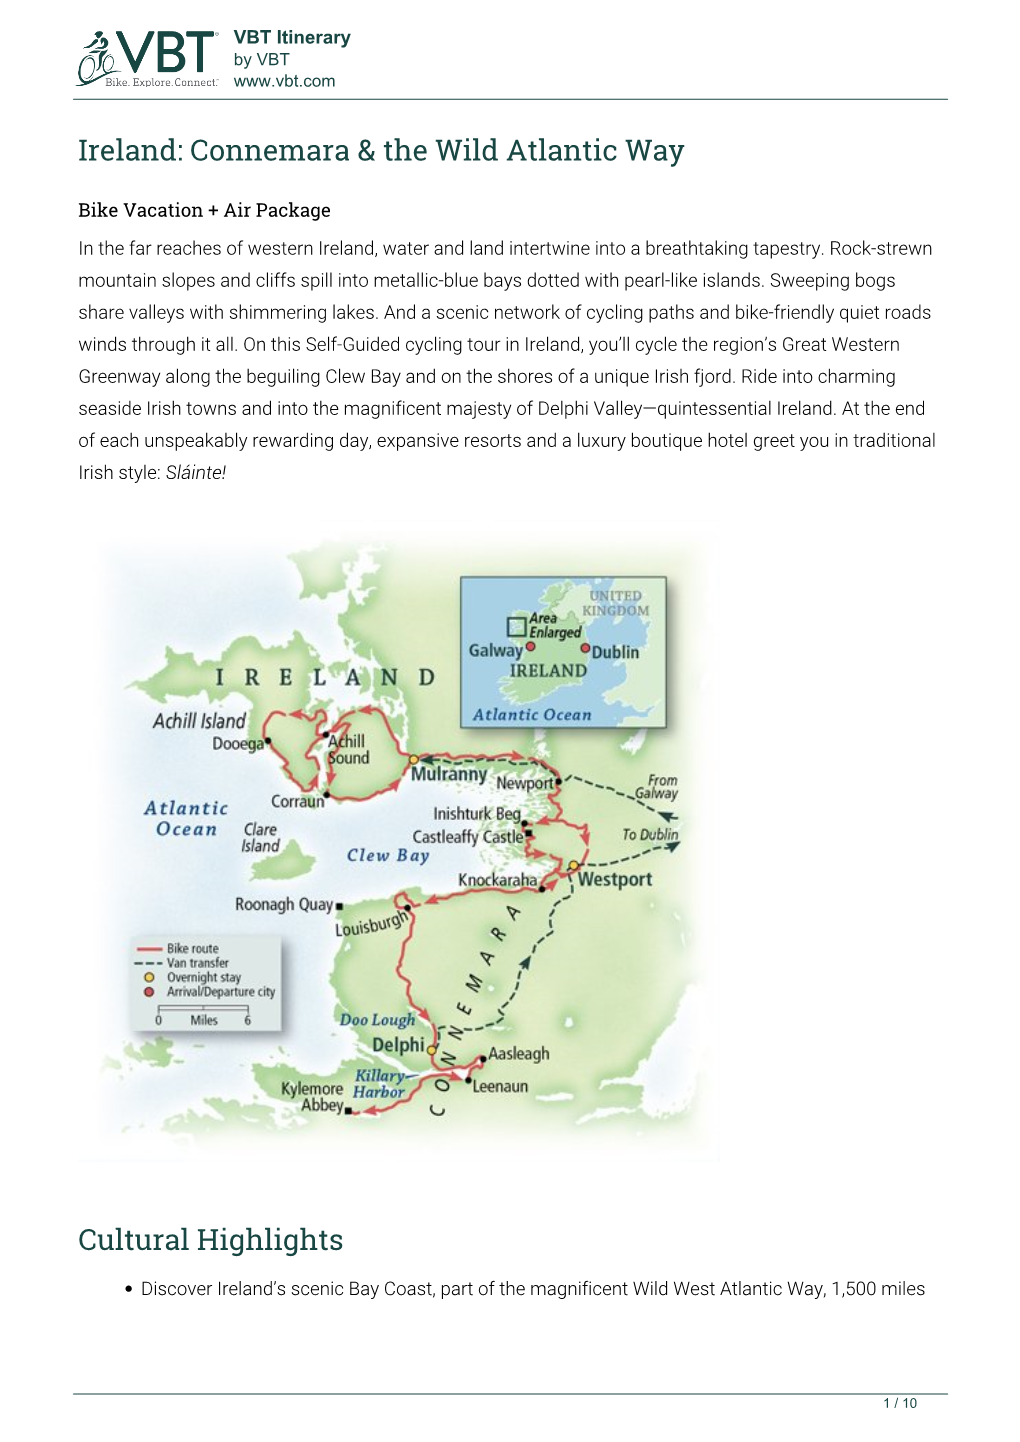 Ireland: Connemara & the Wild Atlantic Way